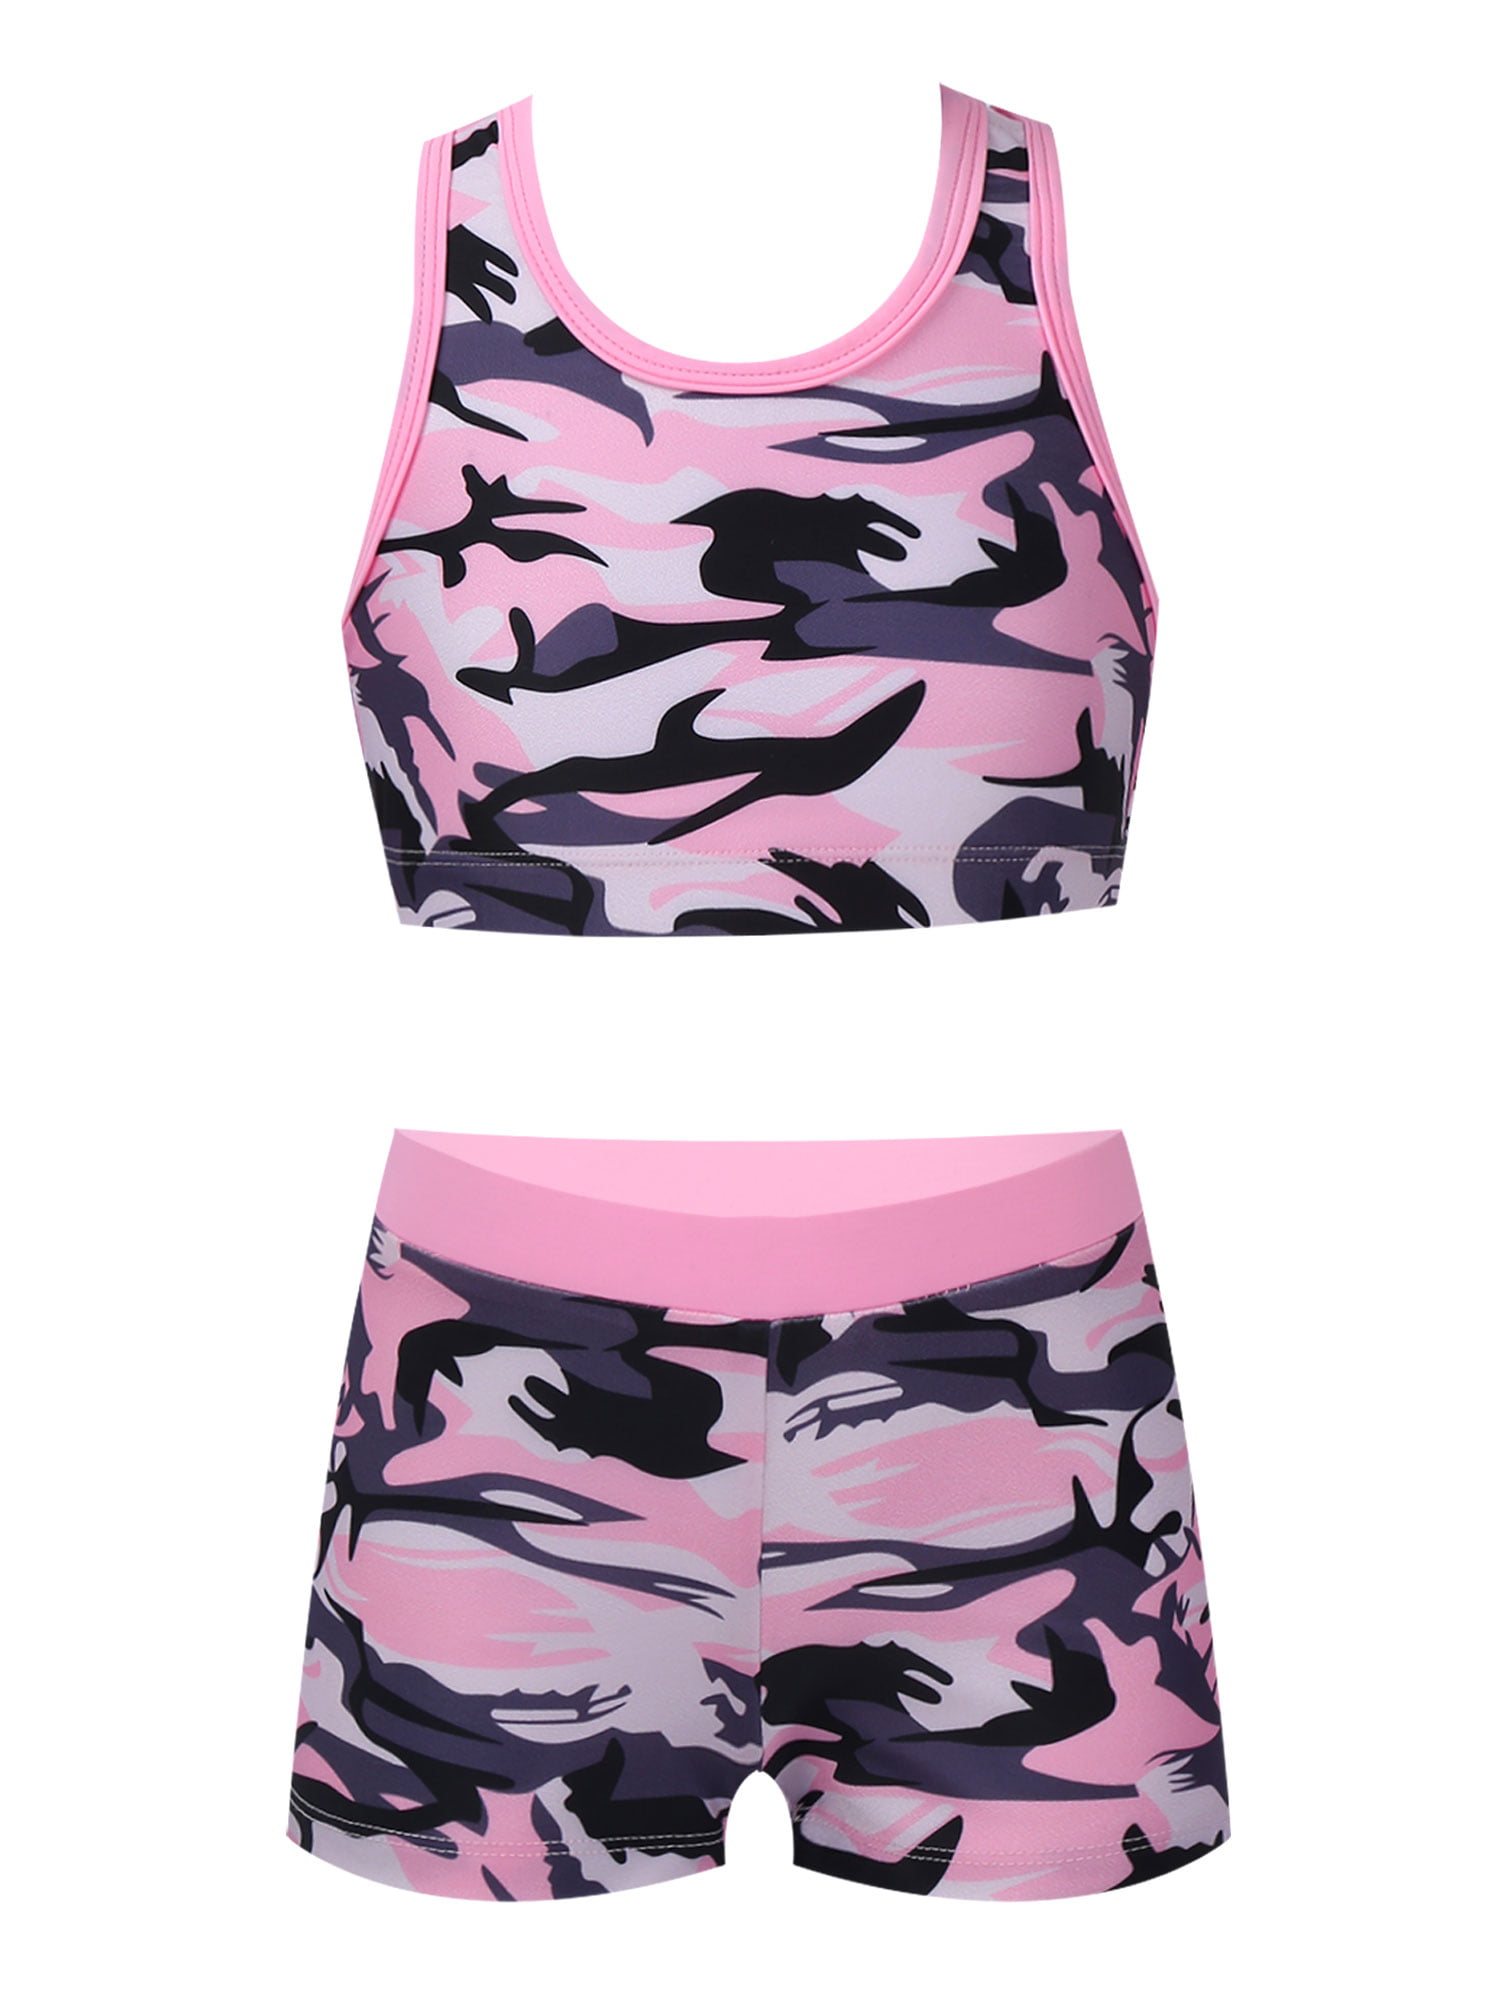 moily Big Girls Candy Tie Dye Tankini Set Cirss Cross Back Tank Top with Bottoms Beach Swimsuit 